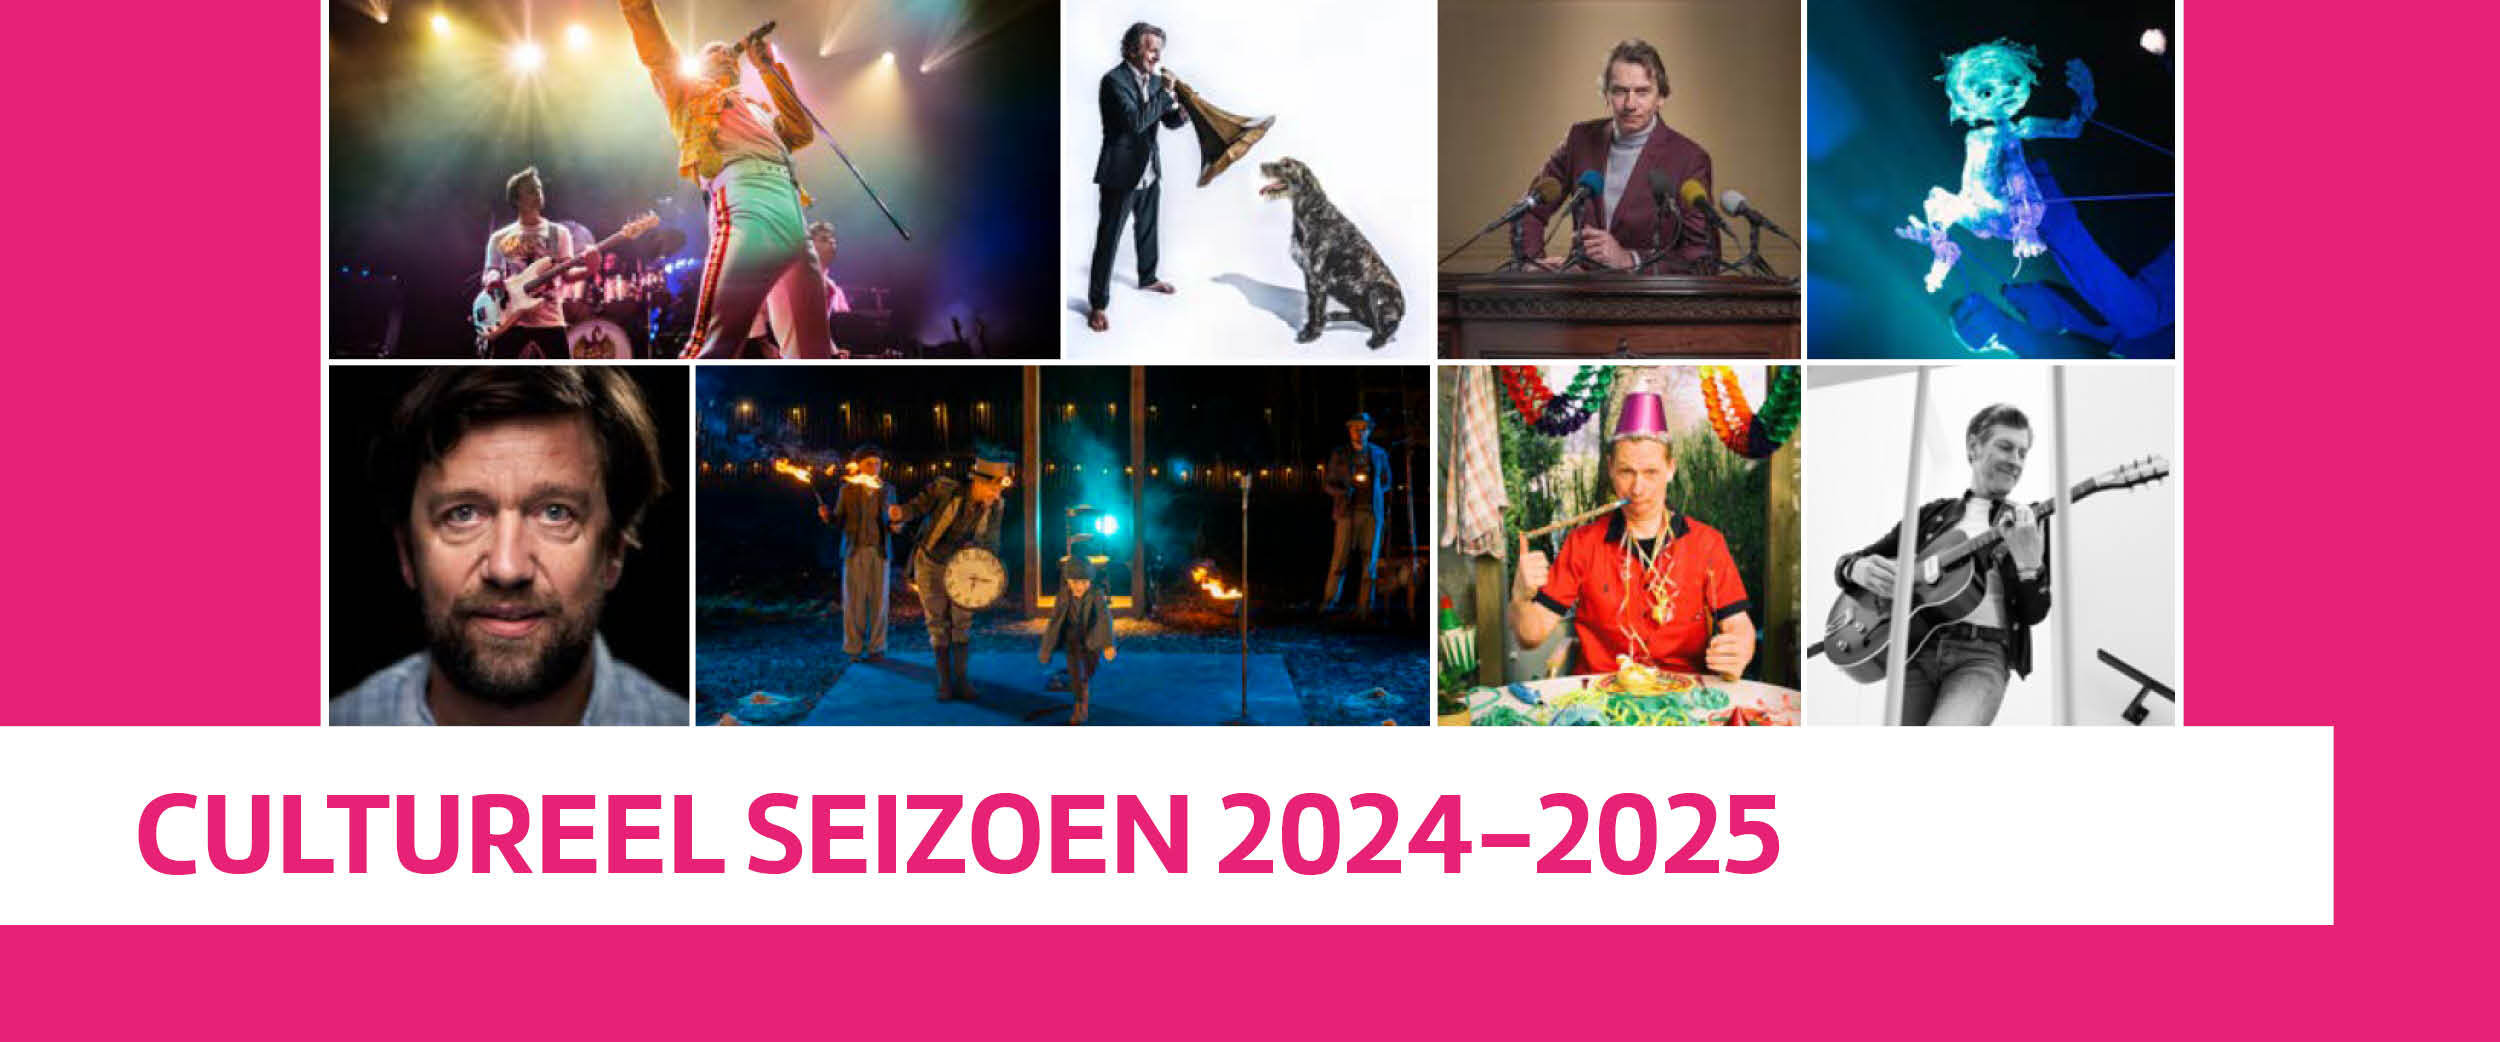 Programmatie cultureel seizoen 2024-2025